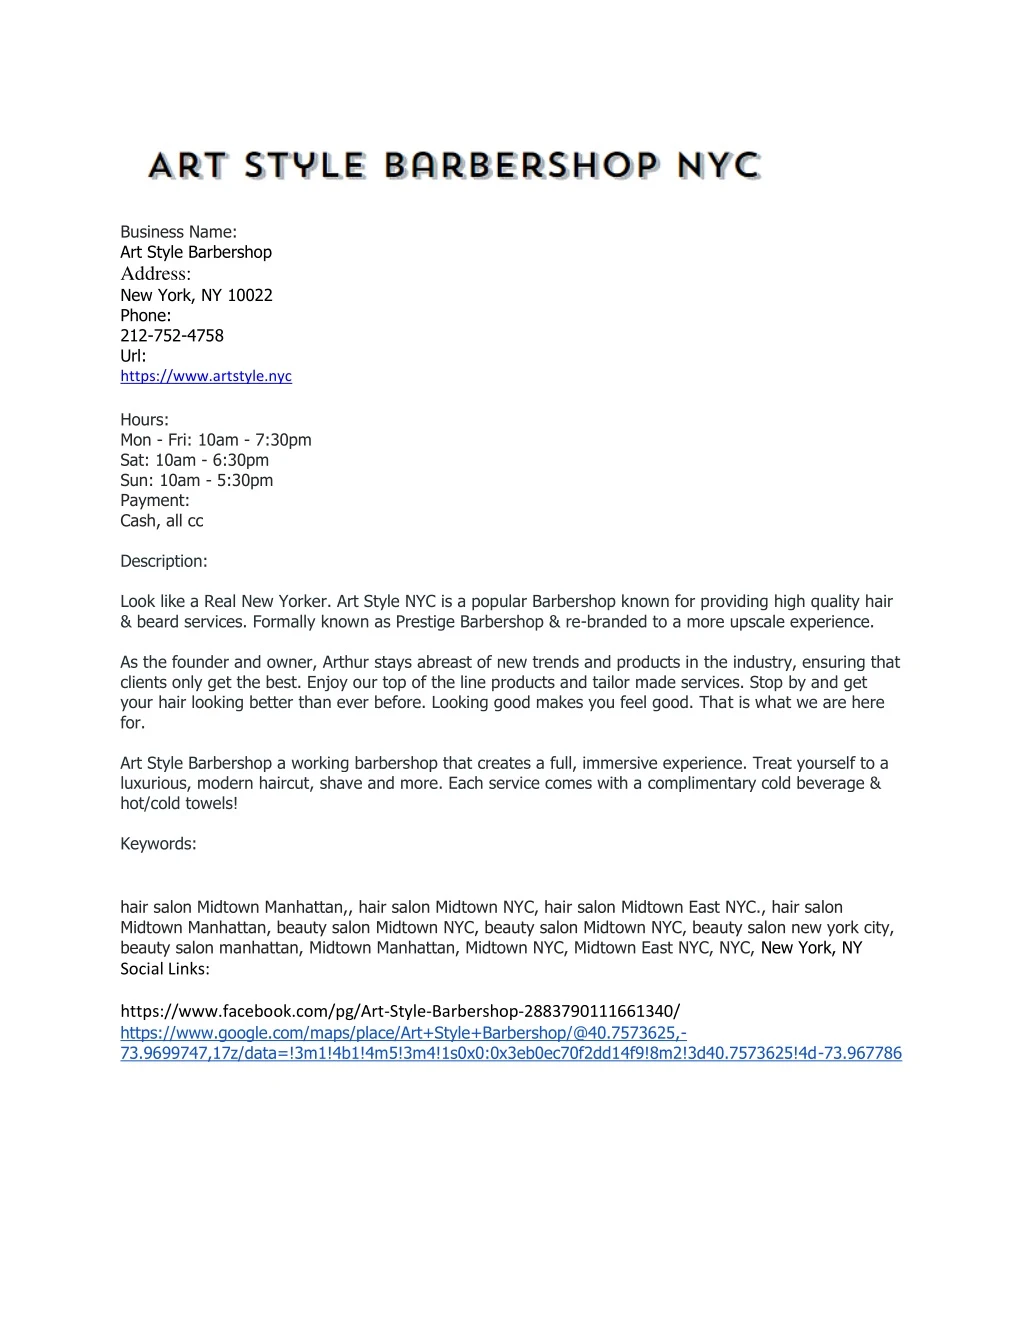 business name art style barbershop address